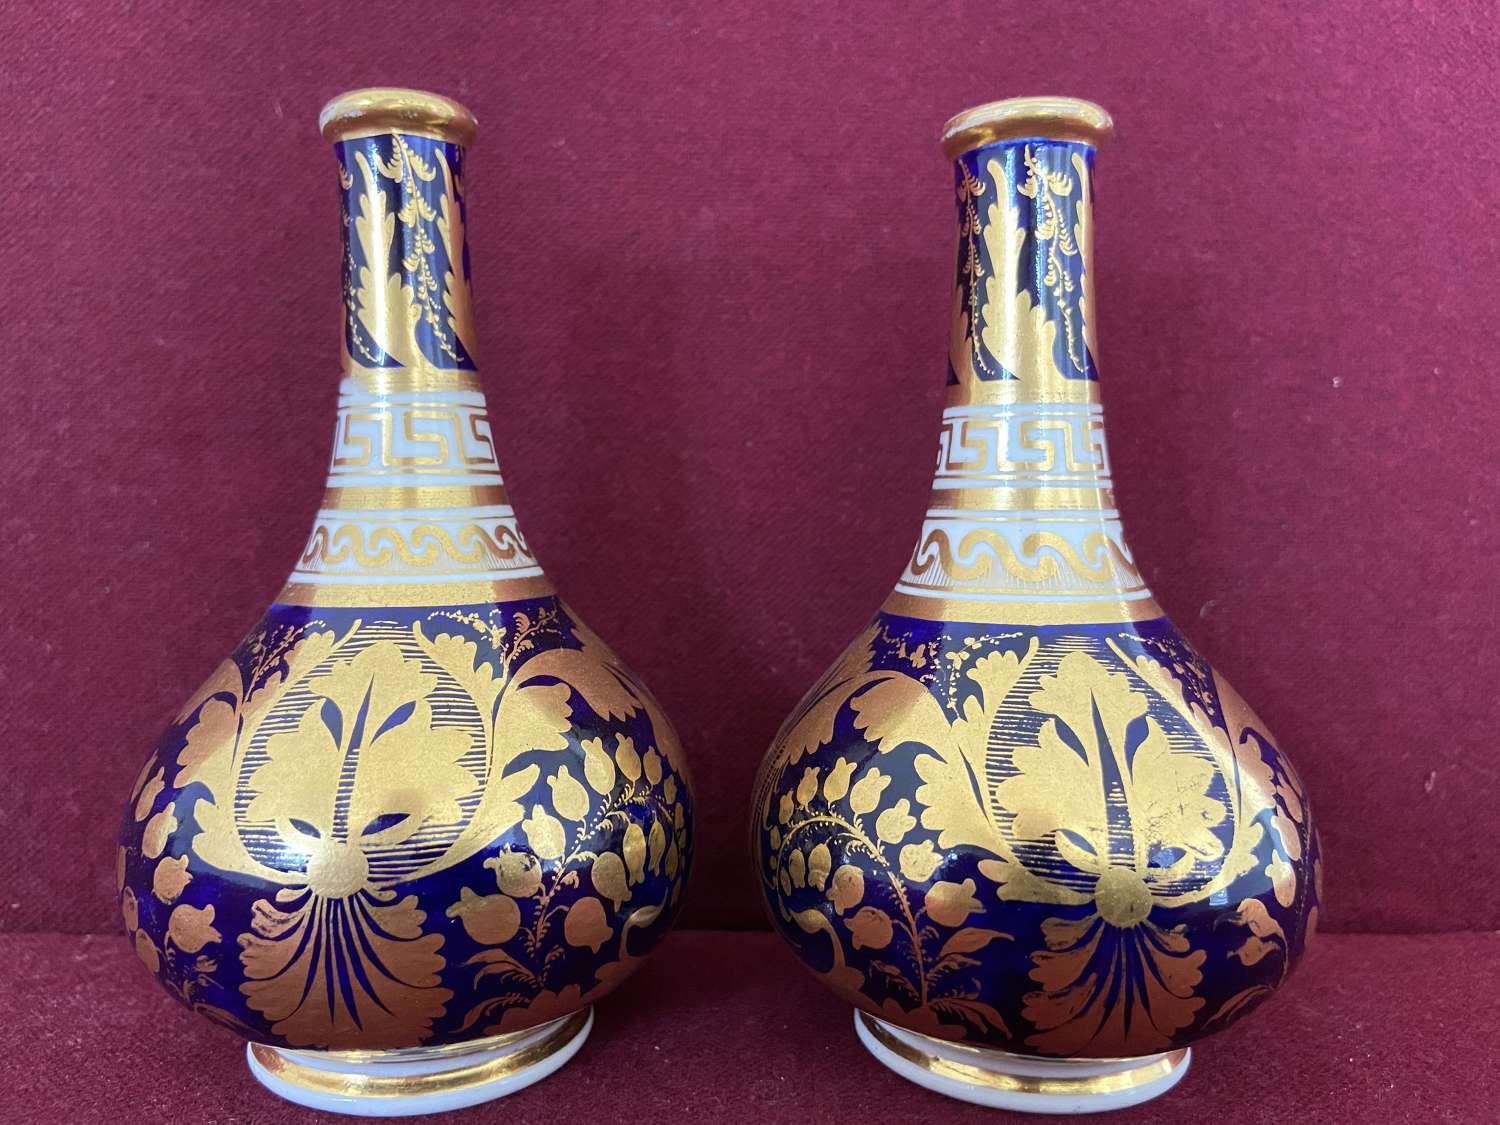 A fine pair of Derby Porcelain scent bottles c.1815